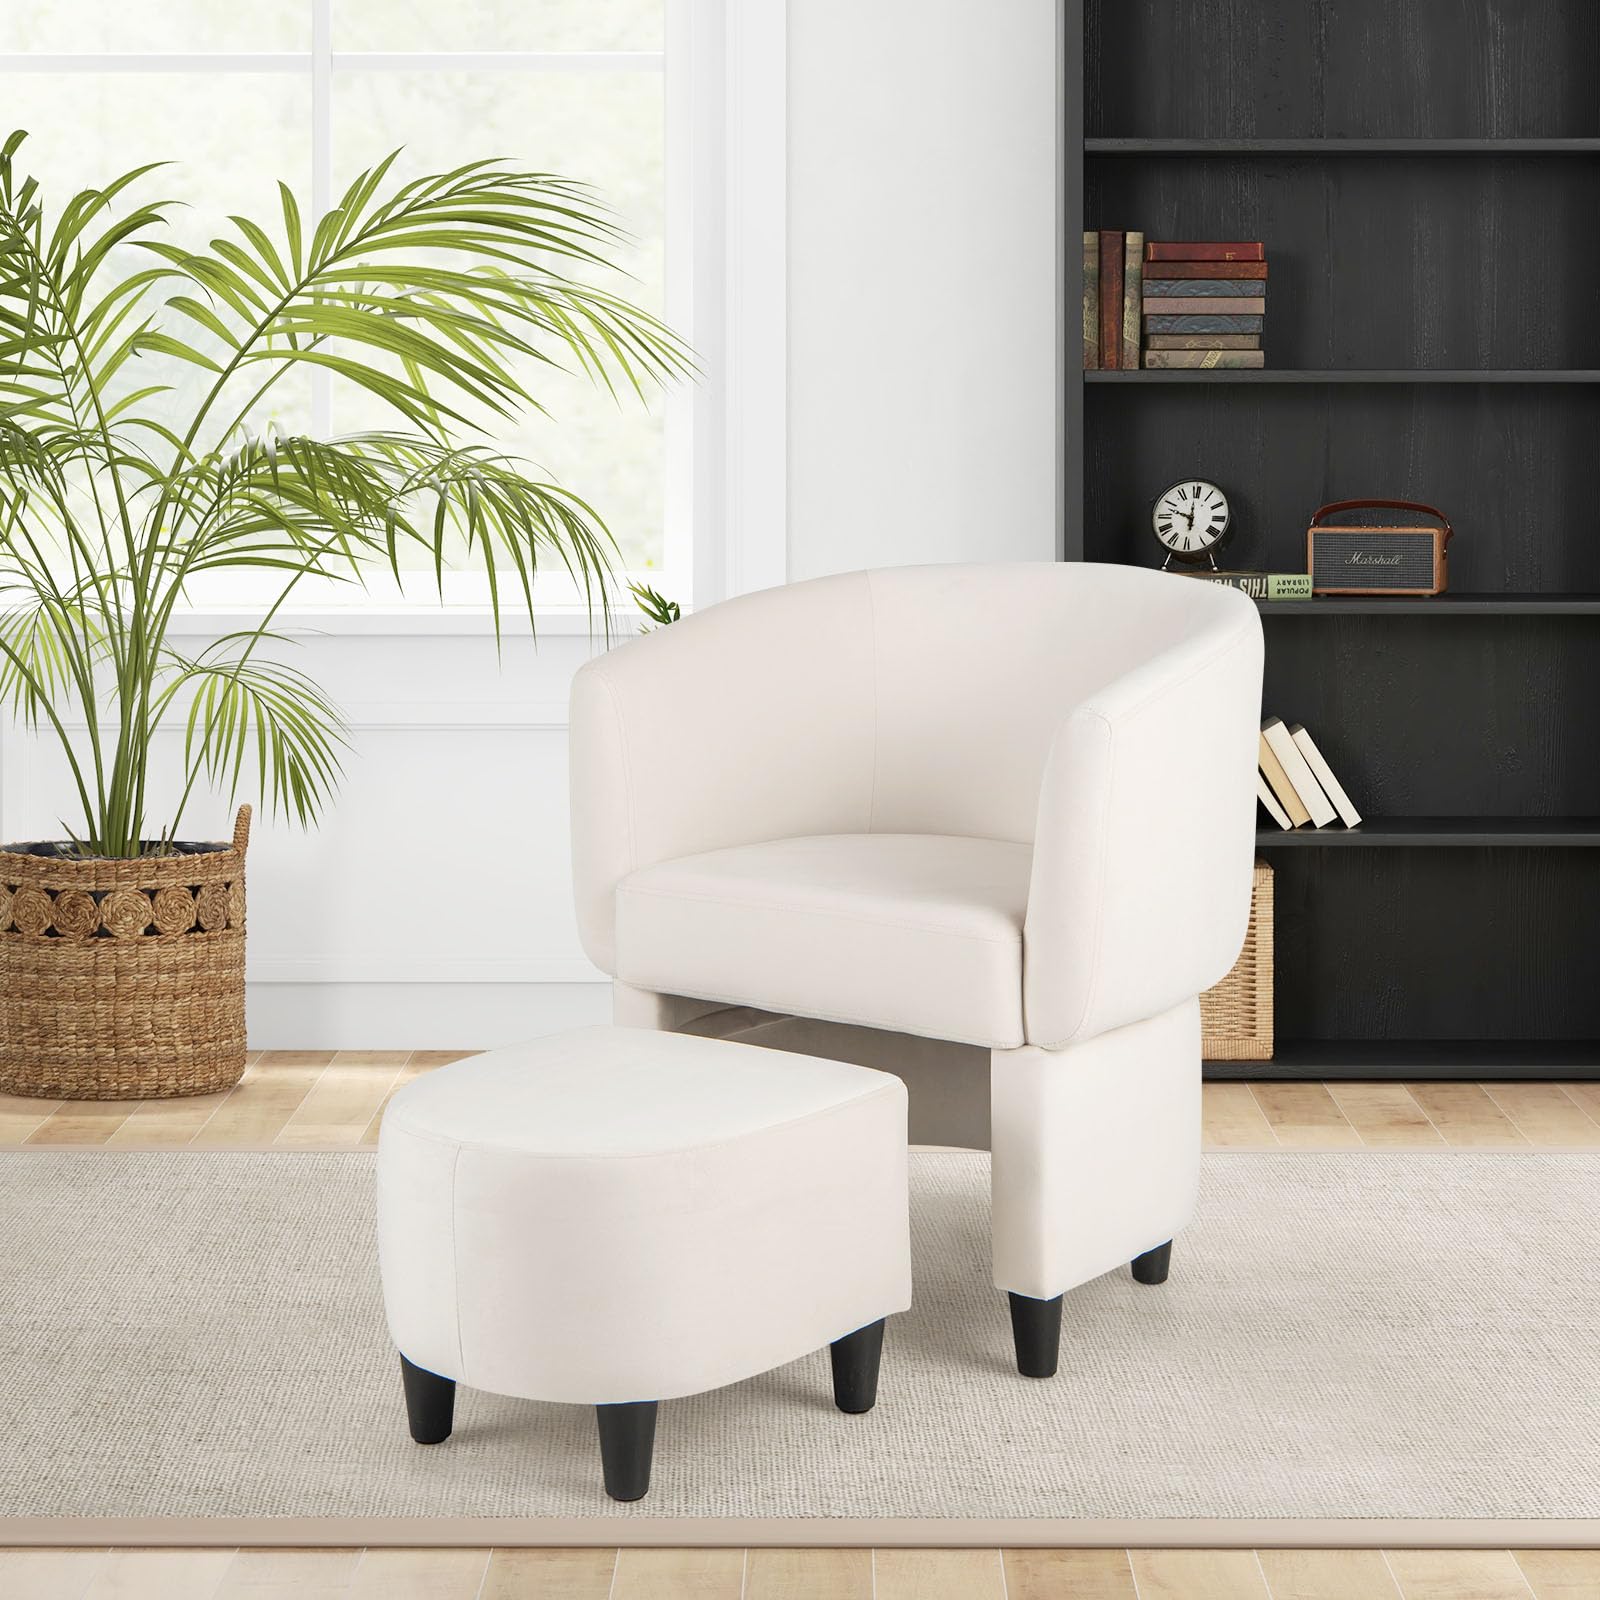 Giantex Modern Accent Chair with Ottoman, Upholstered Velvet Barrel Chair